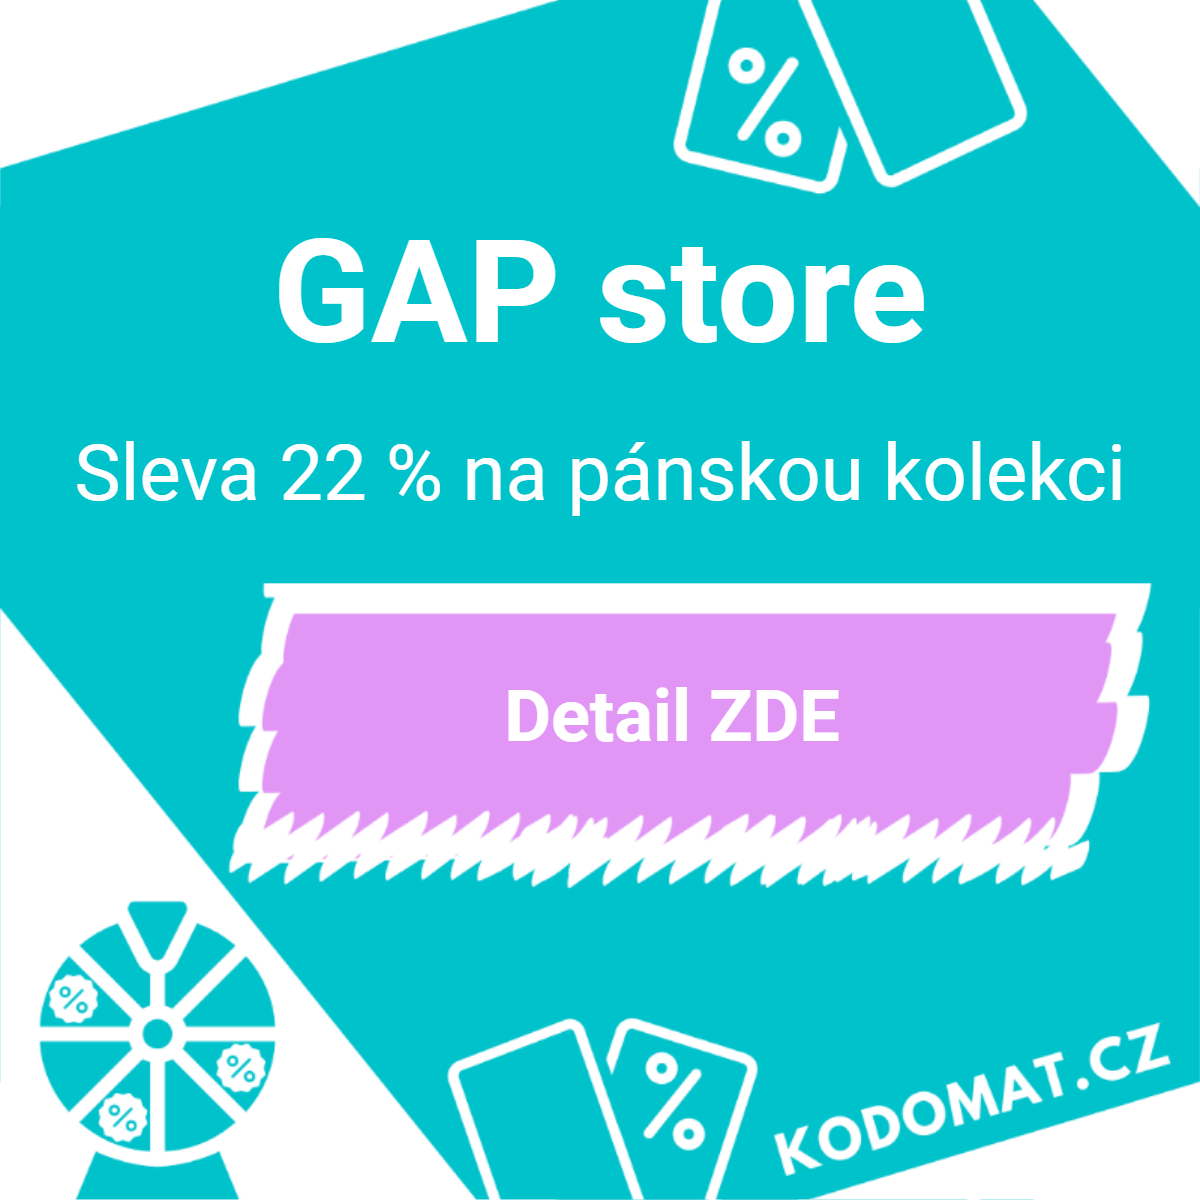 GAP store sleva: Sleva 22 % na pánskou kolekci